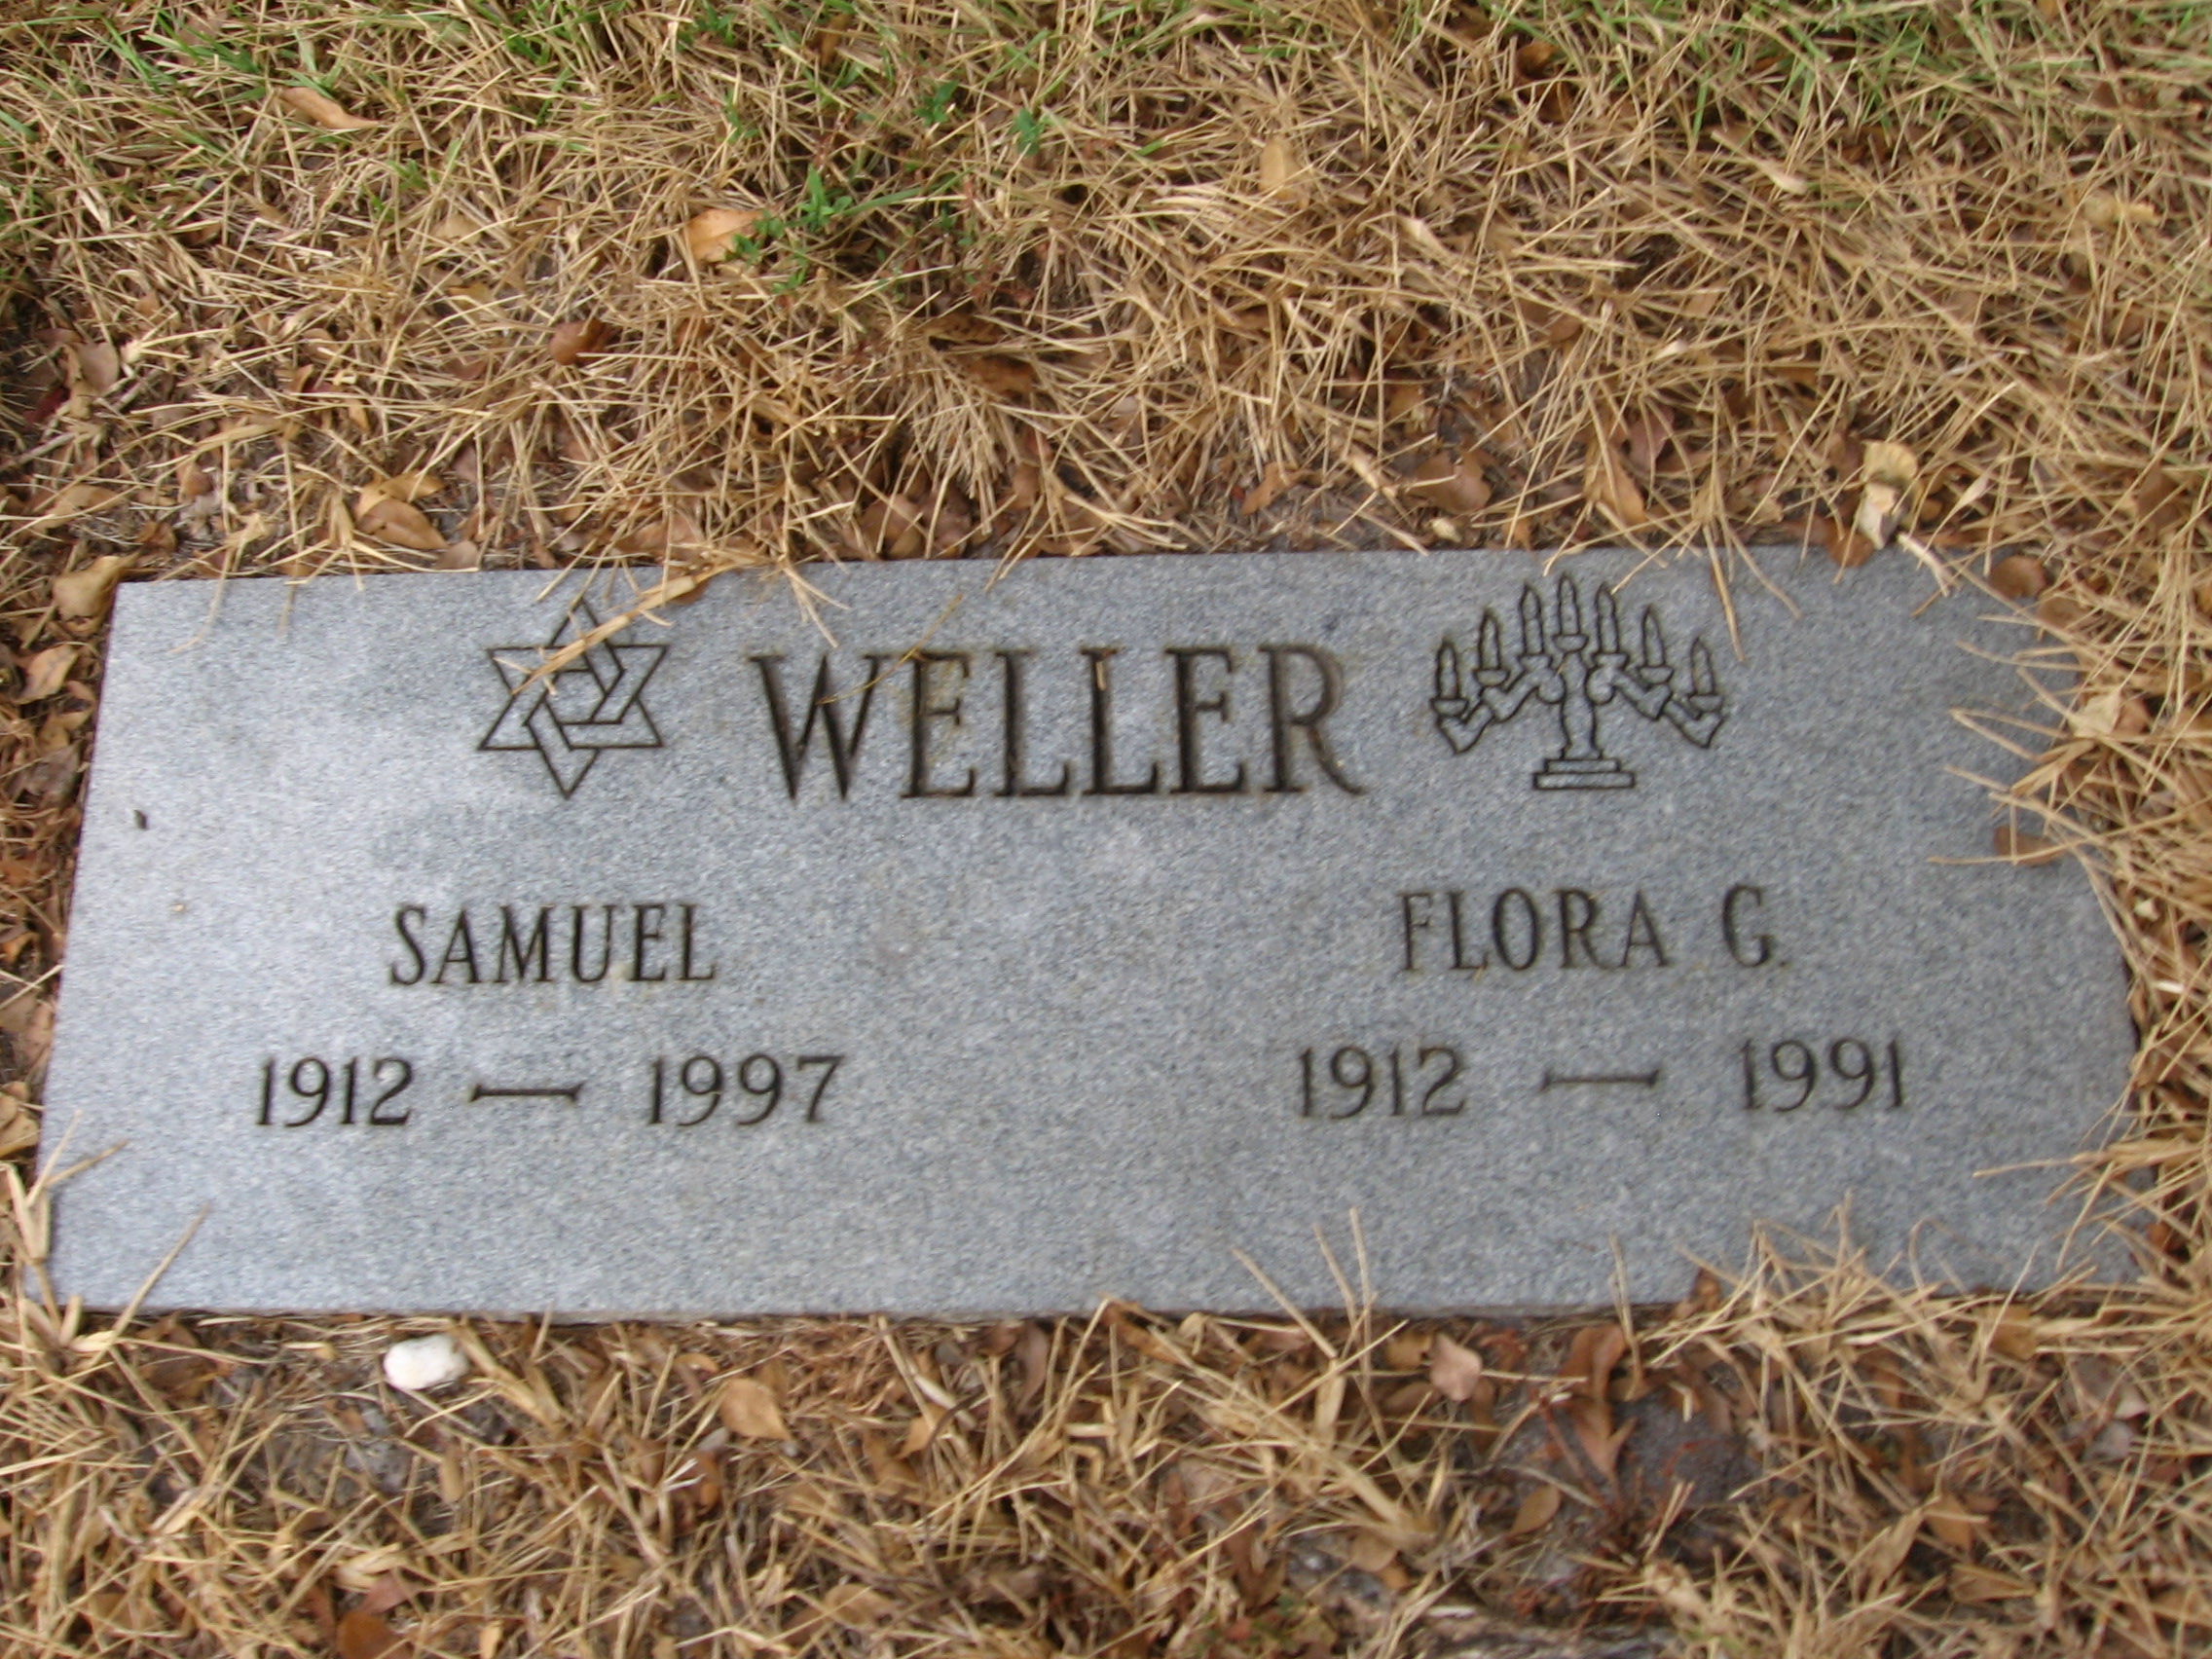 Samuel Weller